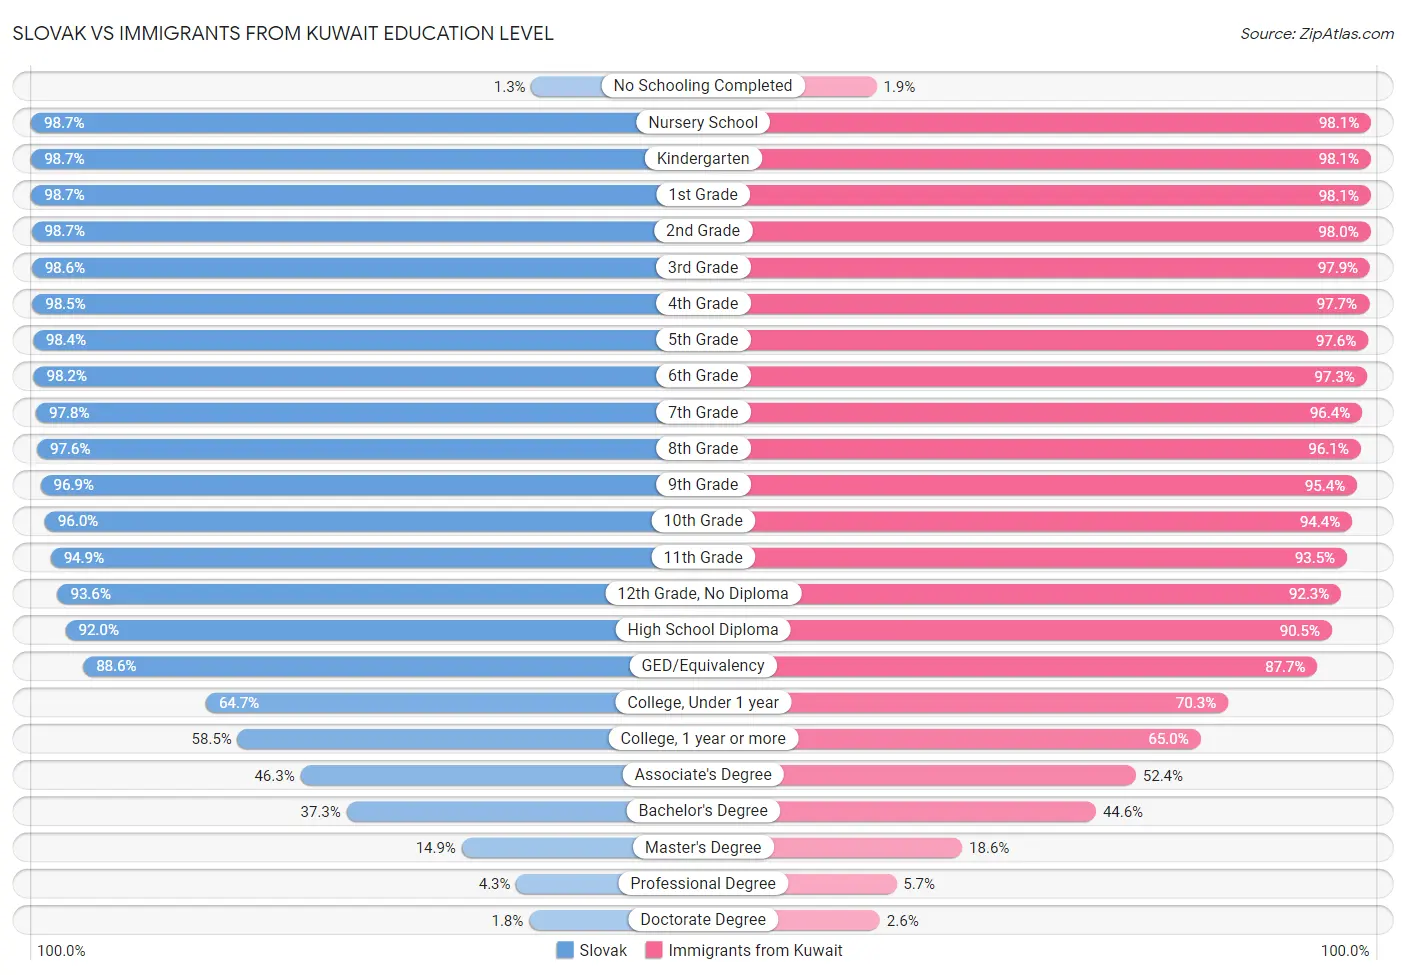 Slovak vs Immigrants from Kuwait Education Level